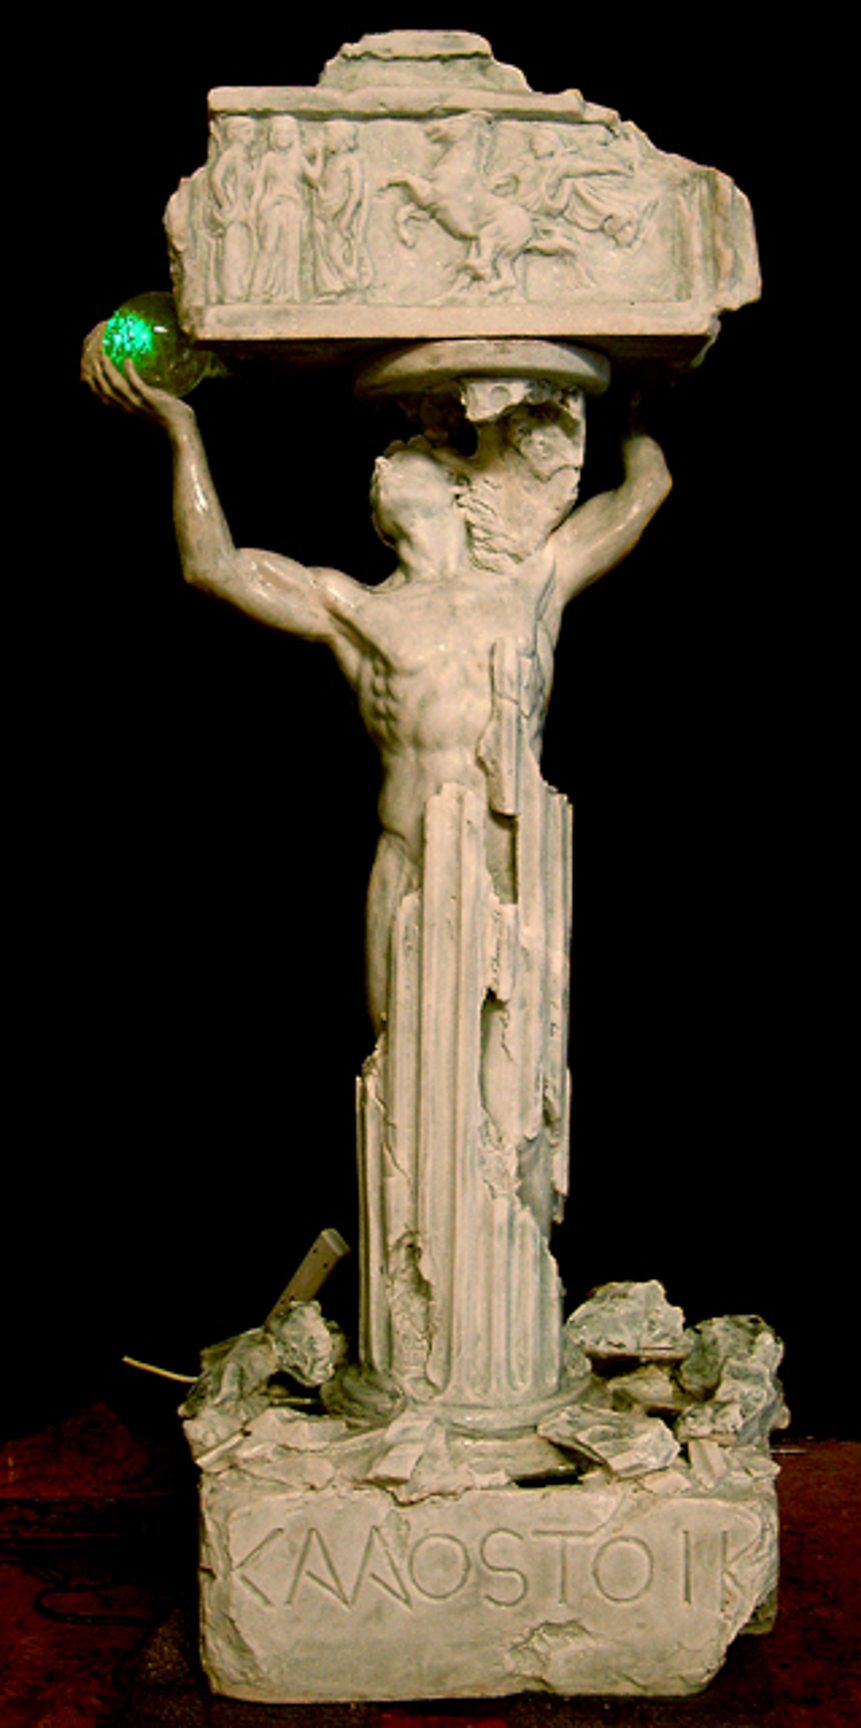 Man in column life size cast stone fine art mythological figurative classic sculpture by Robert Canningham